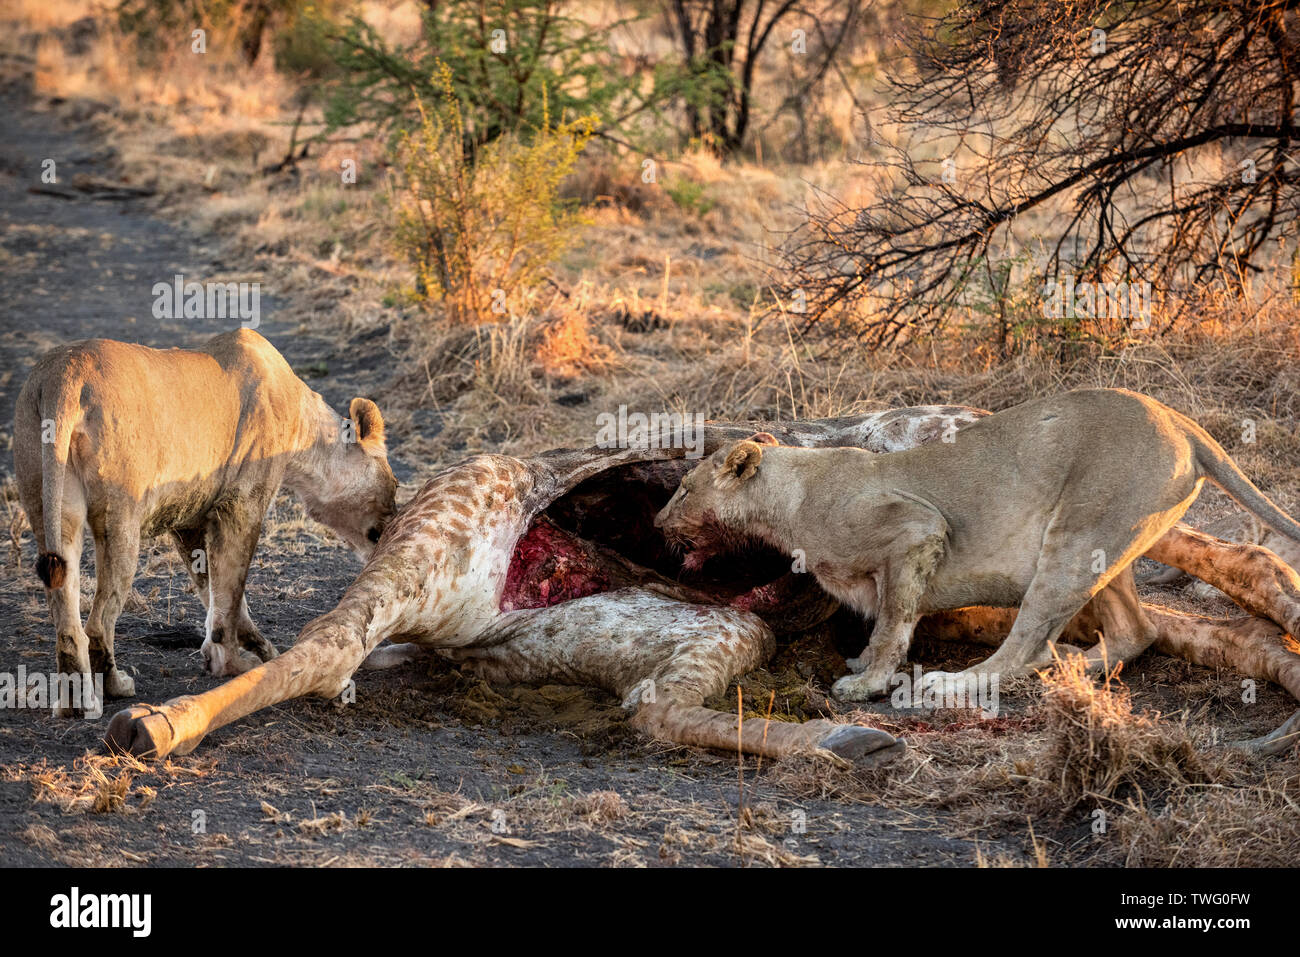 Two lionesses devouring a giraffe Stock Photo